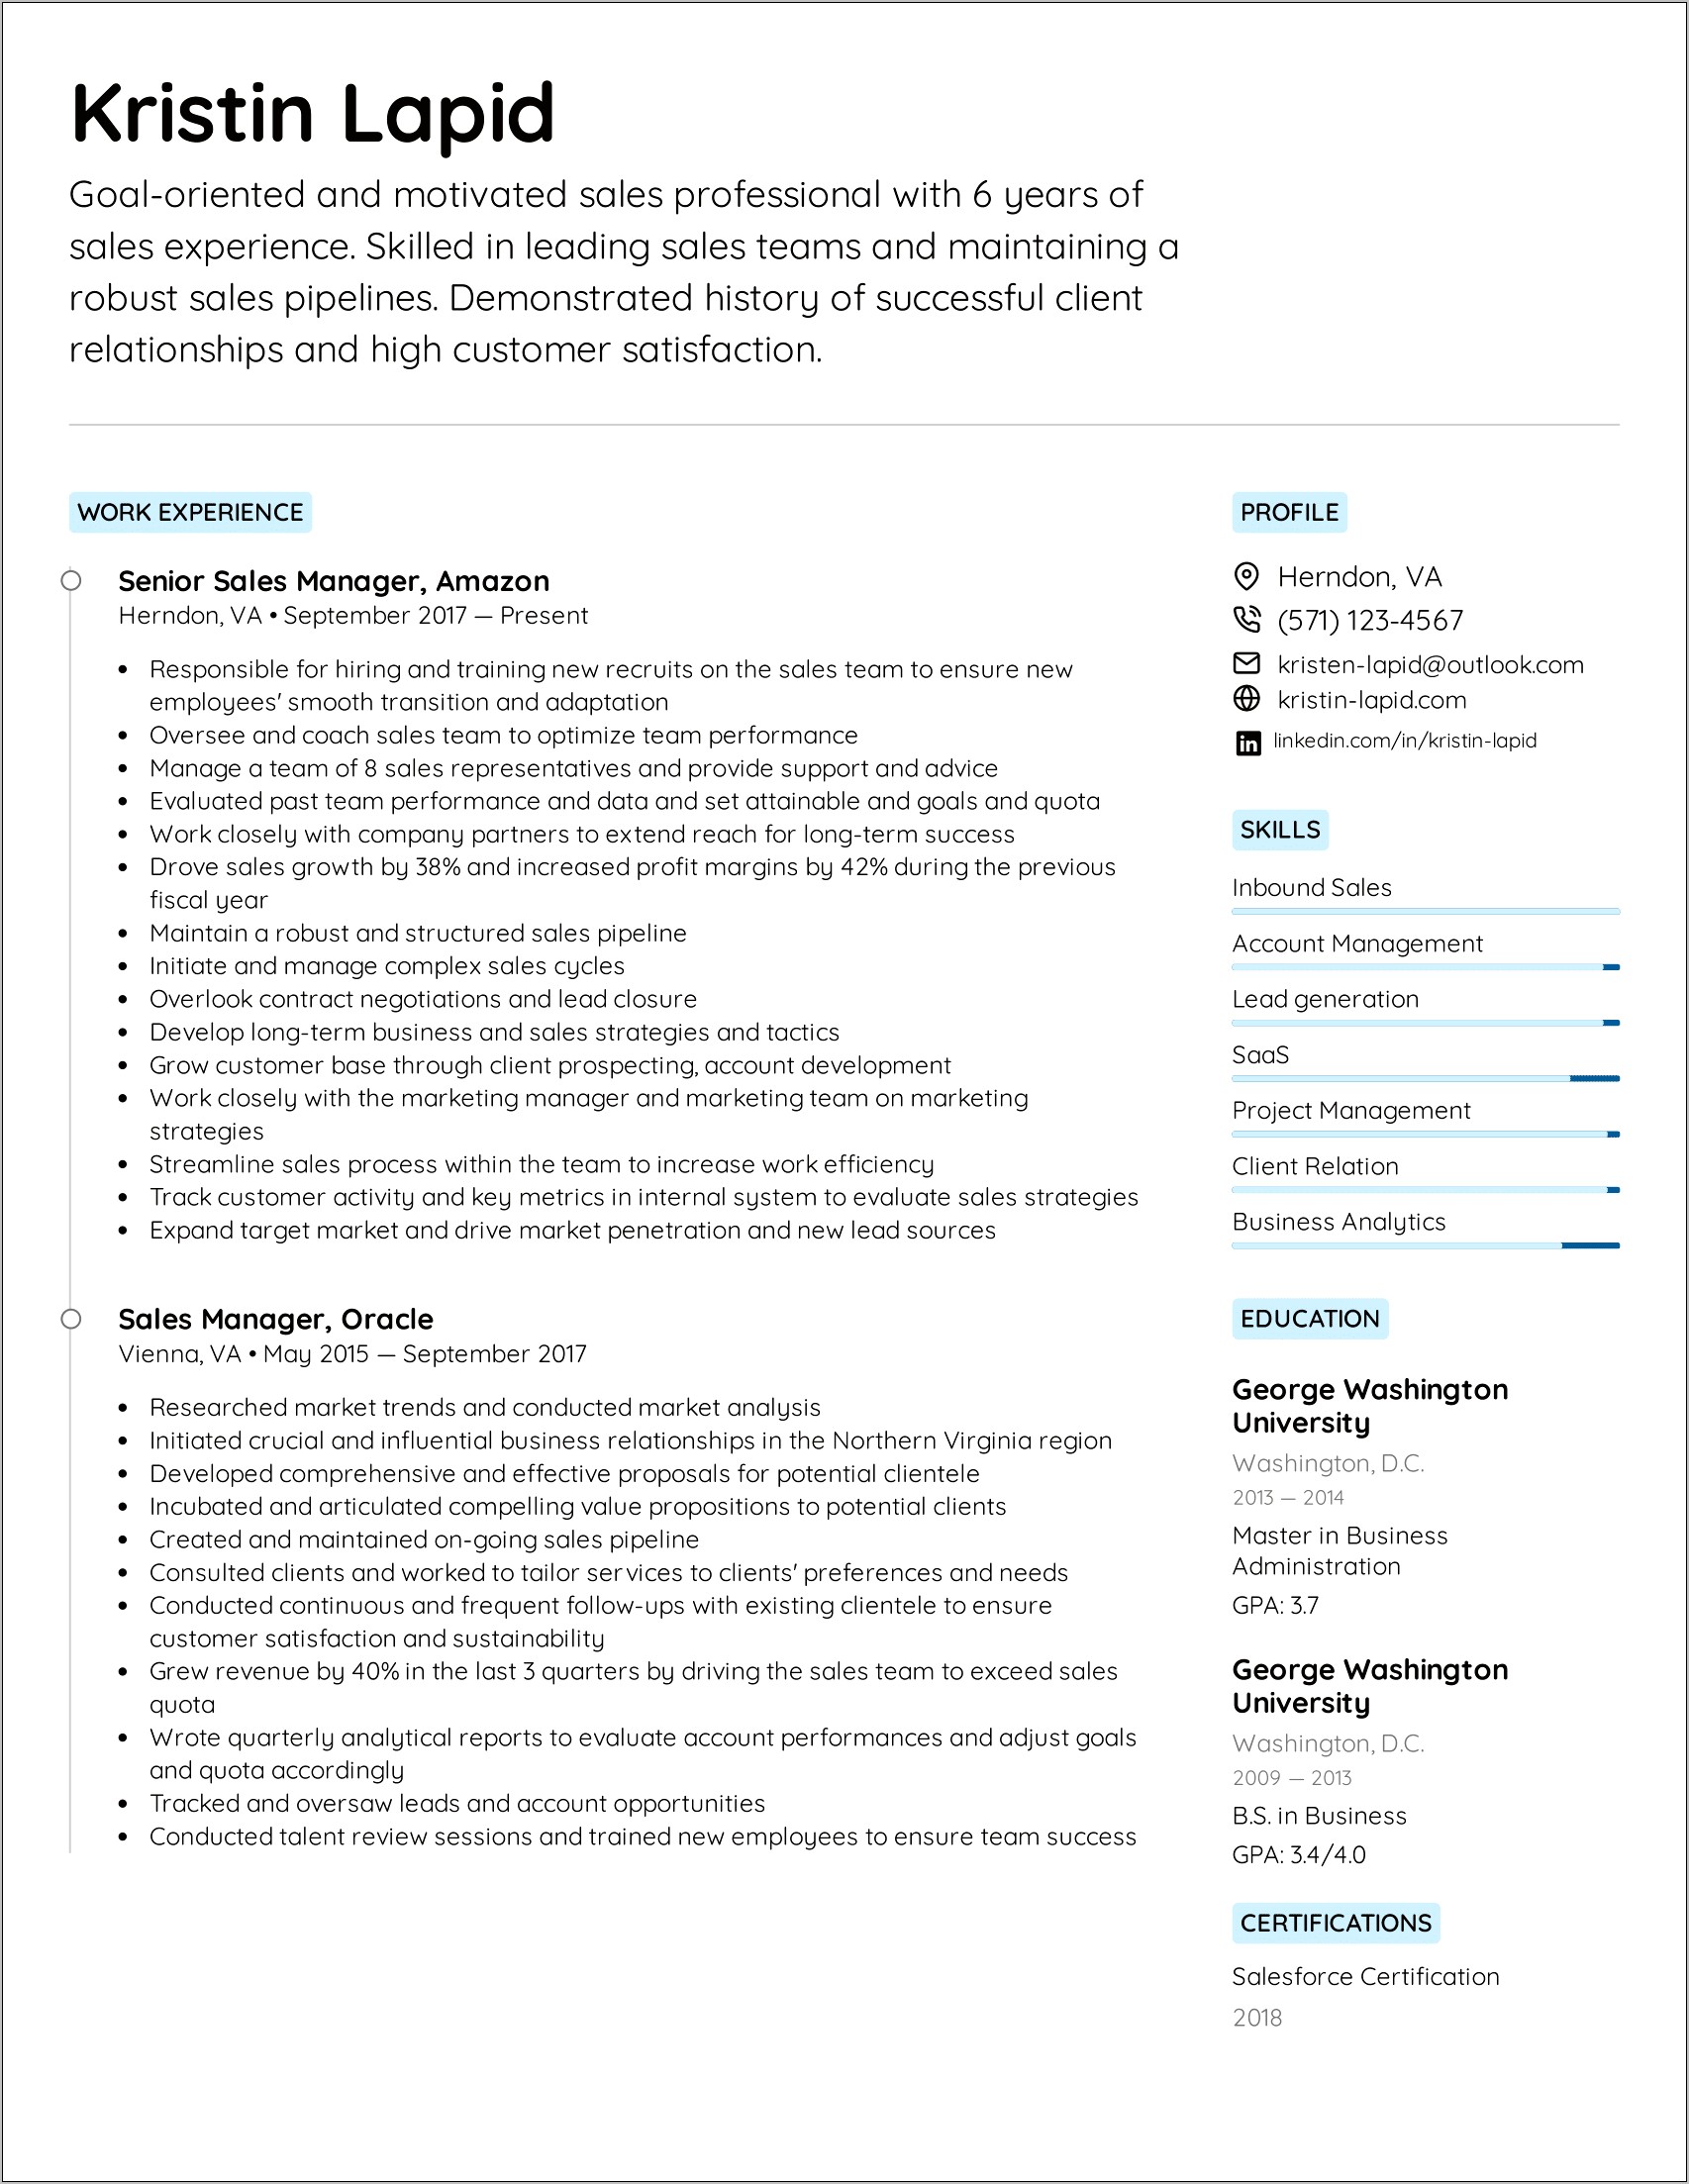 Resume With Job Description Format